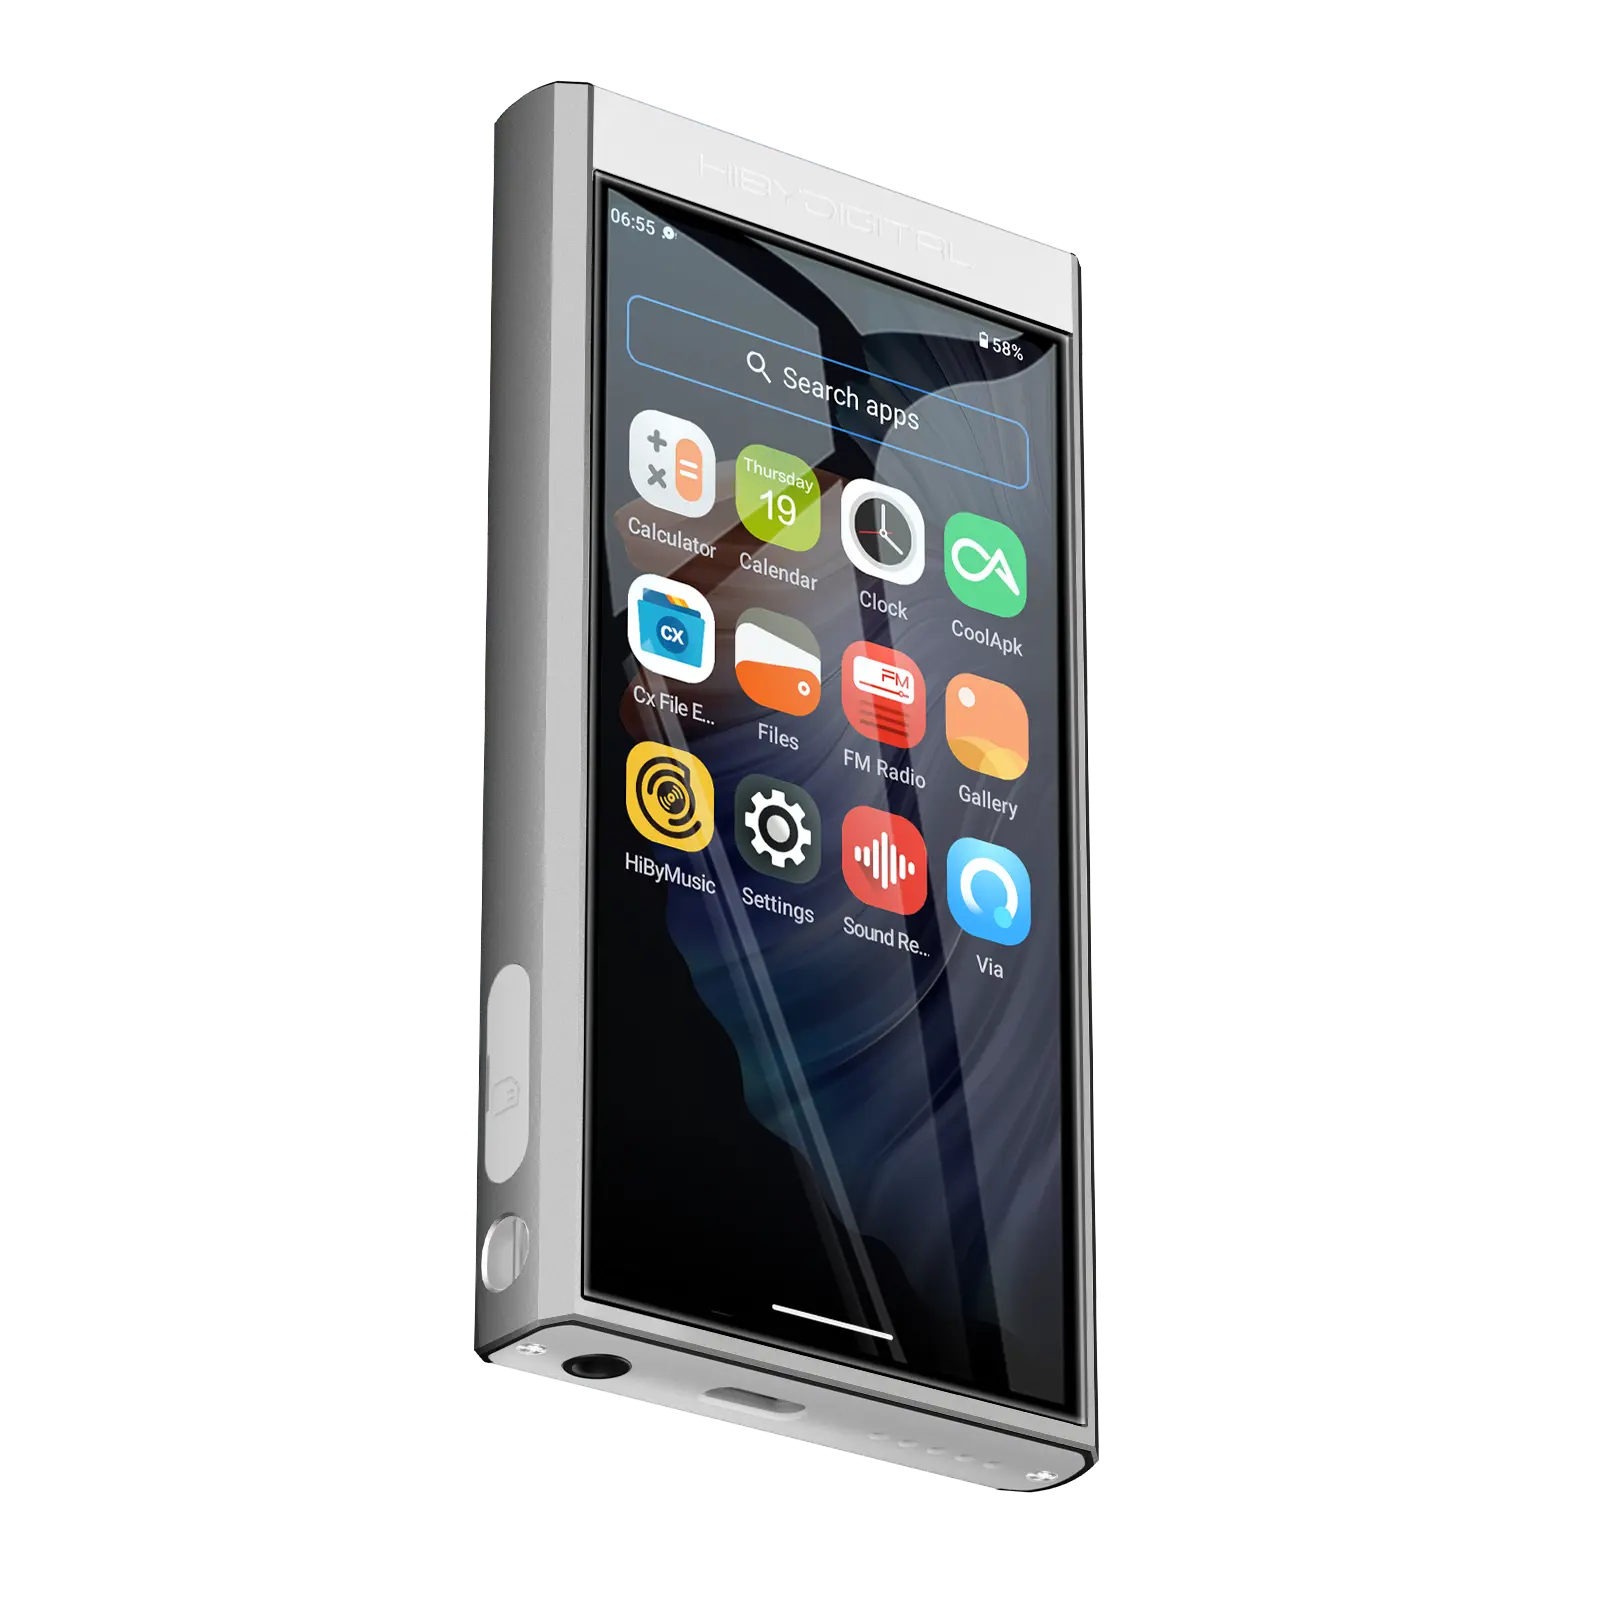 HiBy Digital M300 - Pocketable Android Digital Audio Player